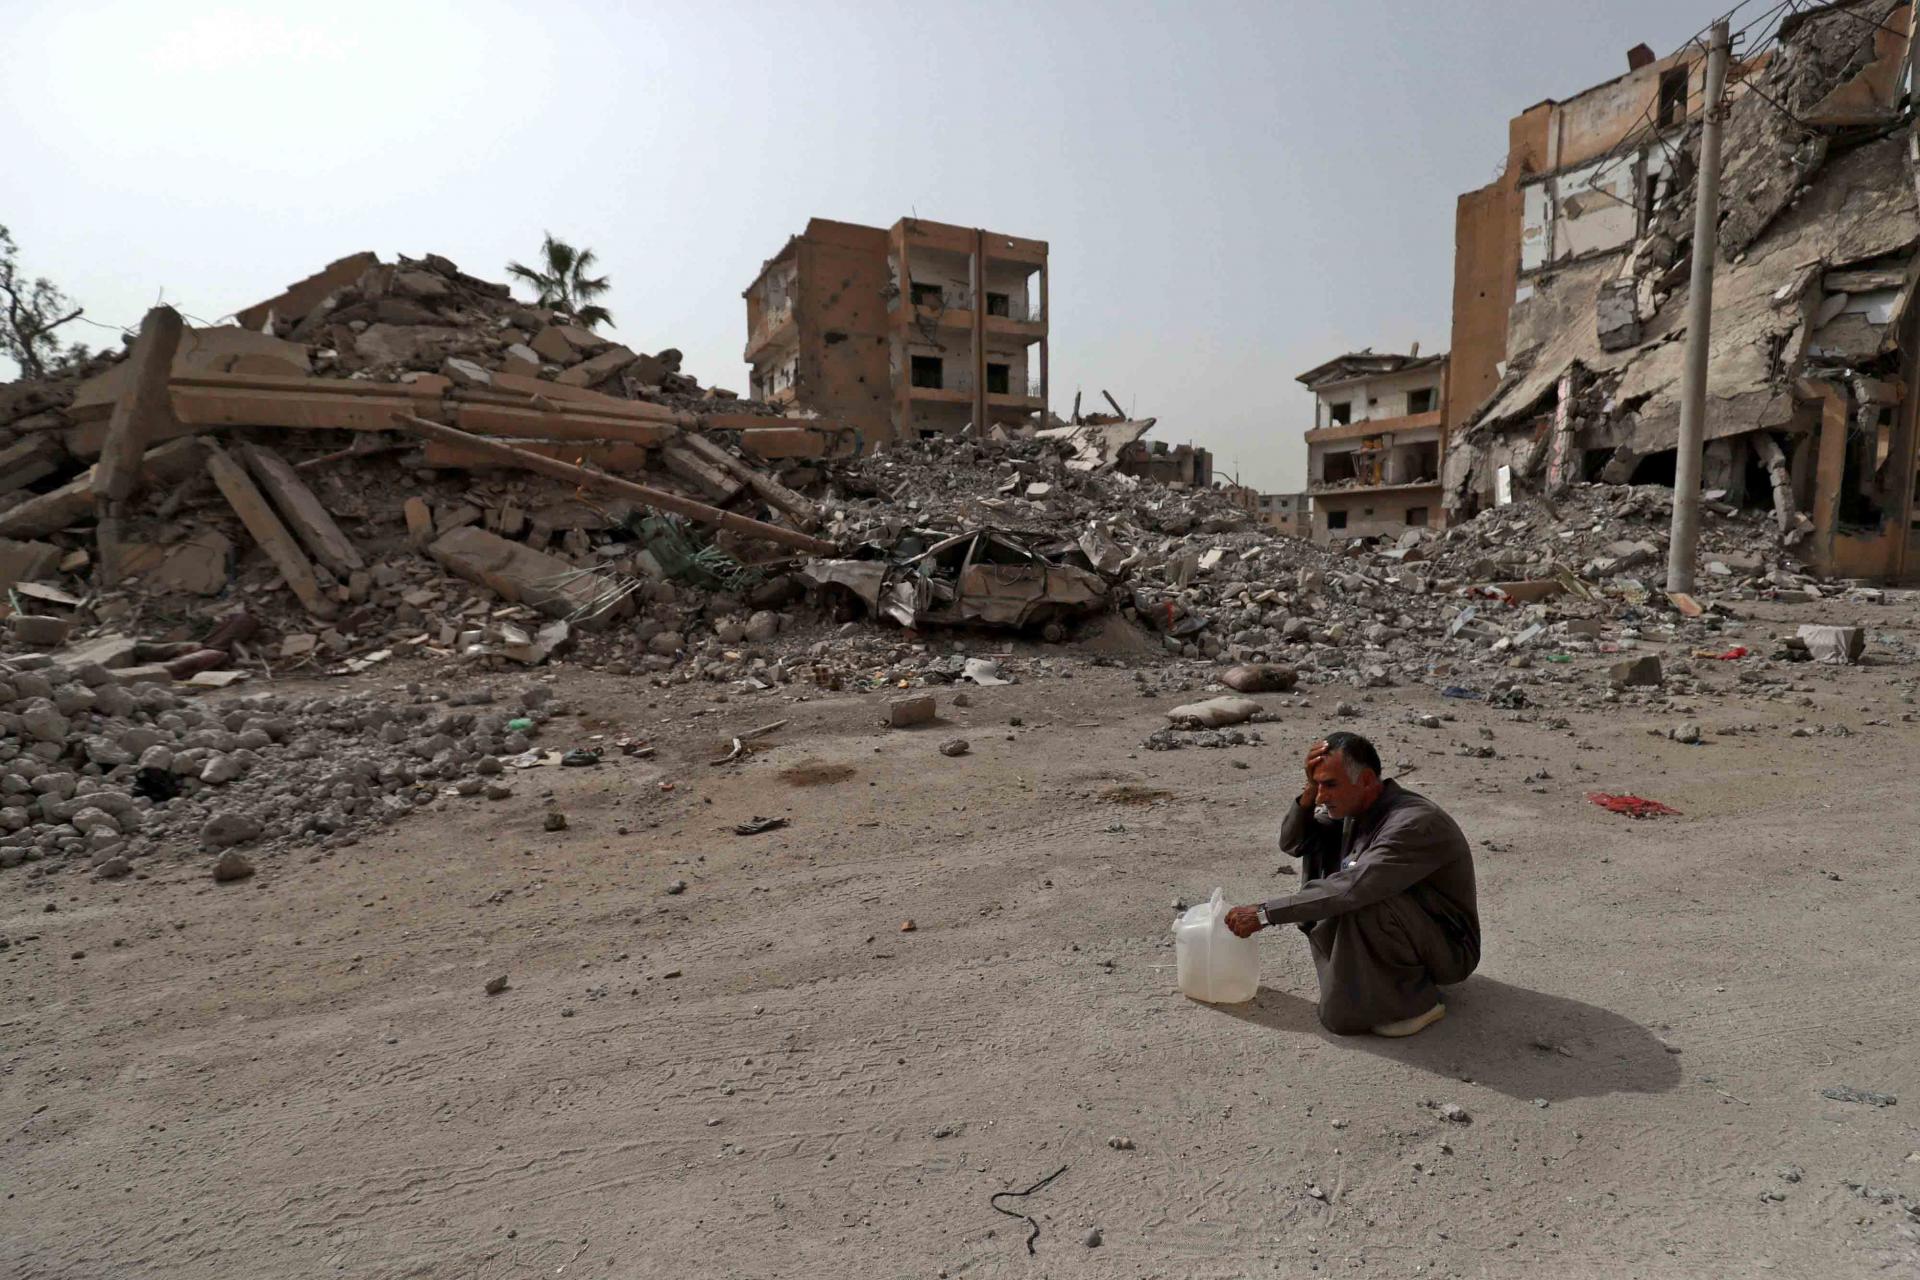 Rights group Amnesty International estimates around 80 percent of Raqa was devastated by fighting